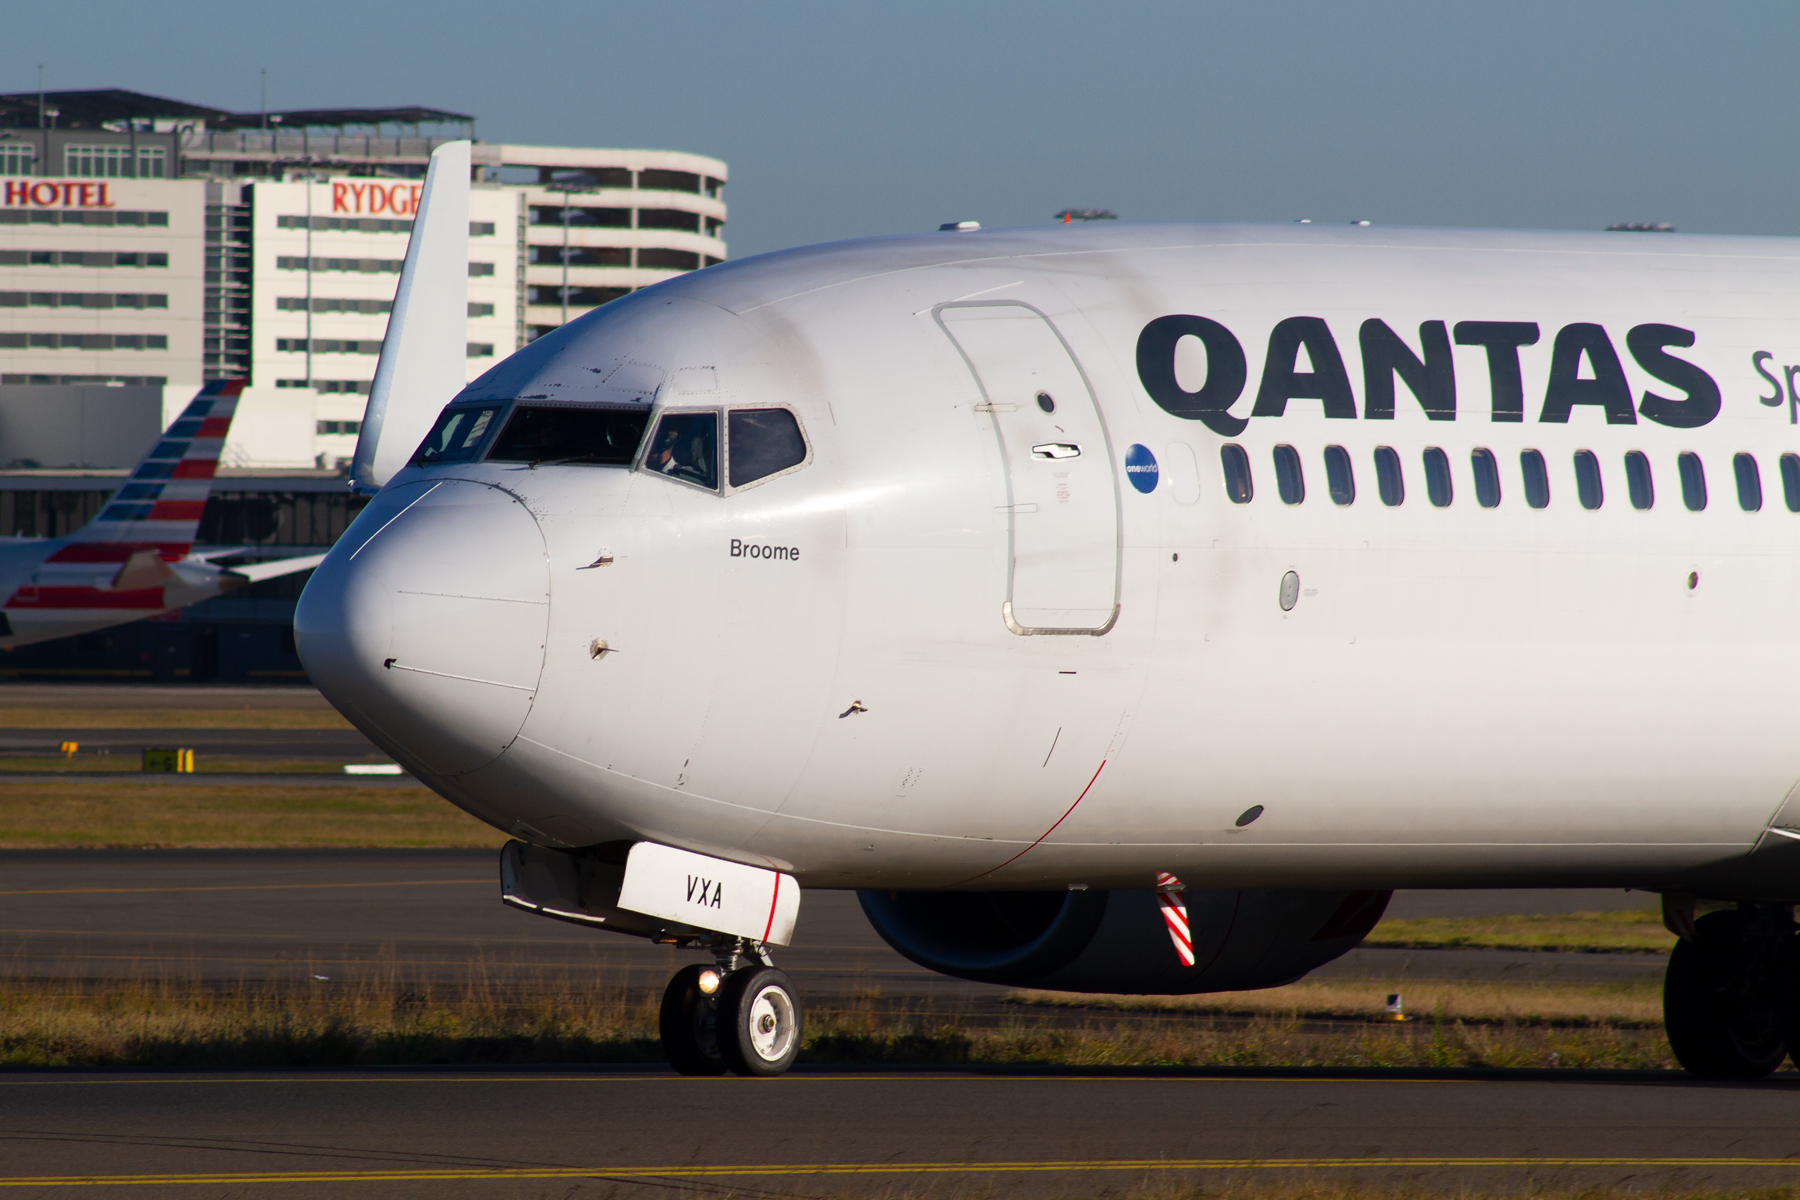 Qantas Boeing 737-800 VH-VXA at Kingsford Smith